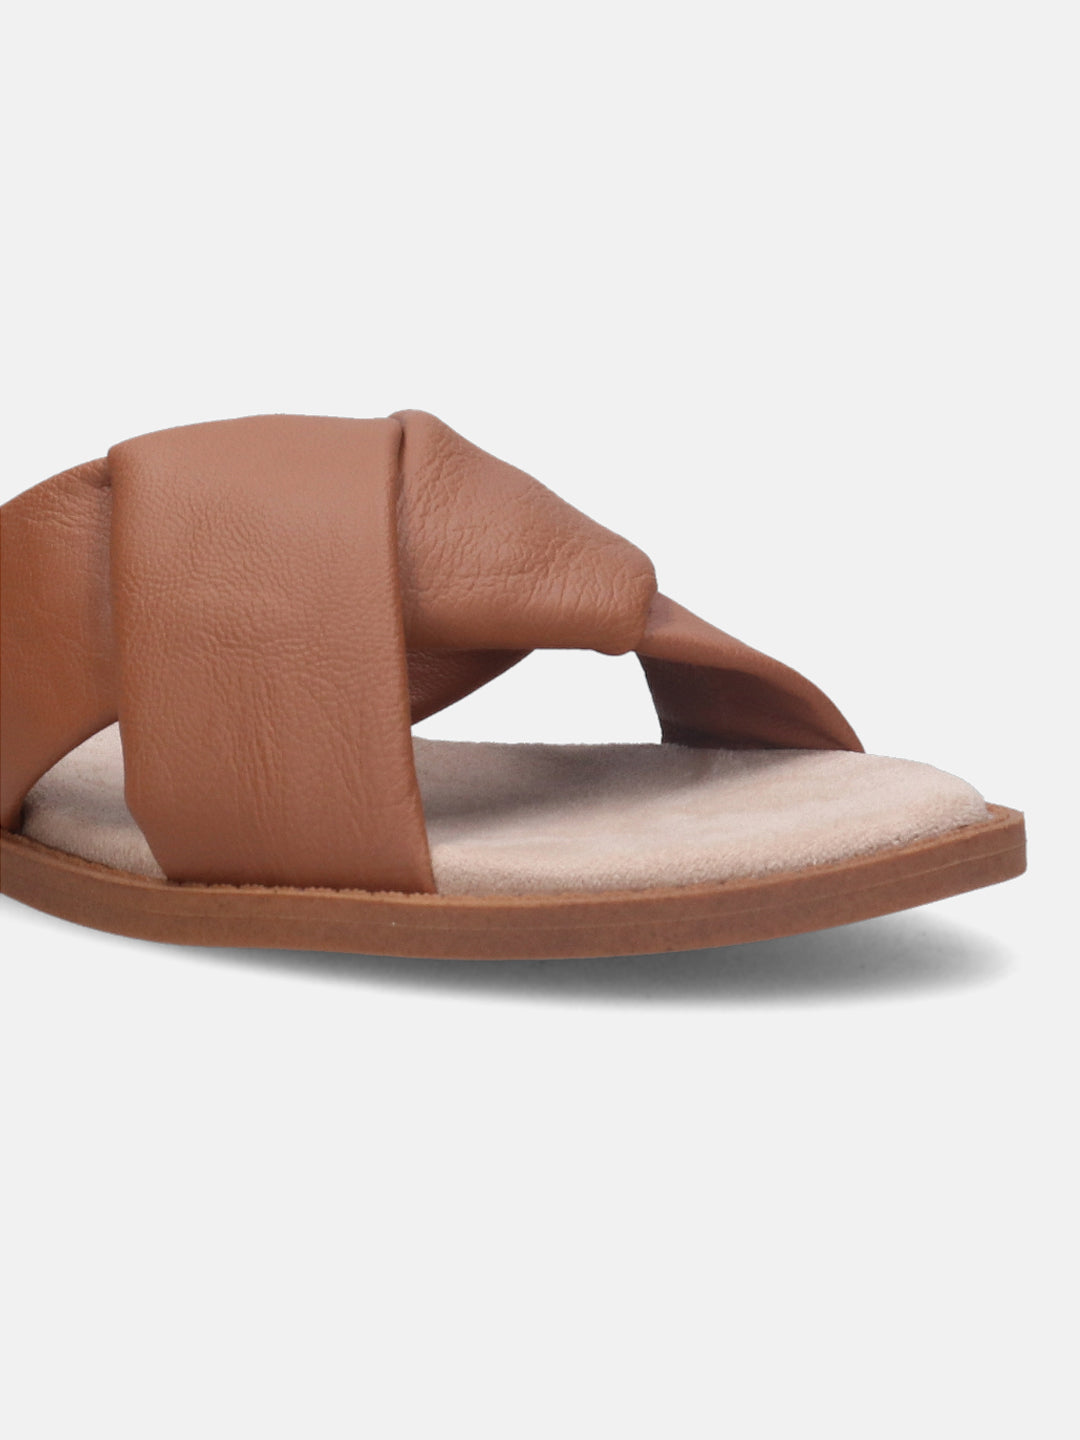 Max 62 Cognac Nubuck Sandals by Josef Seibel | Shop Online at Mathers